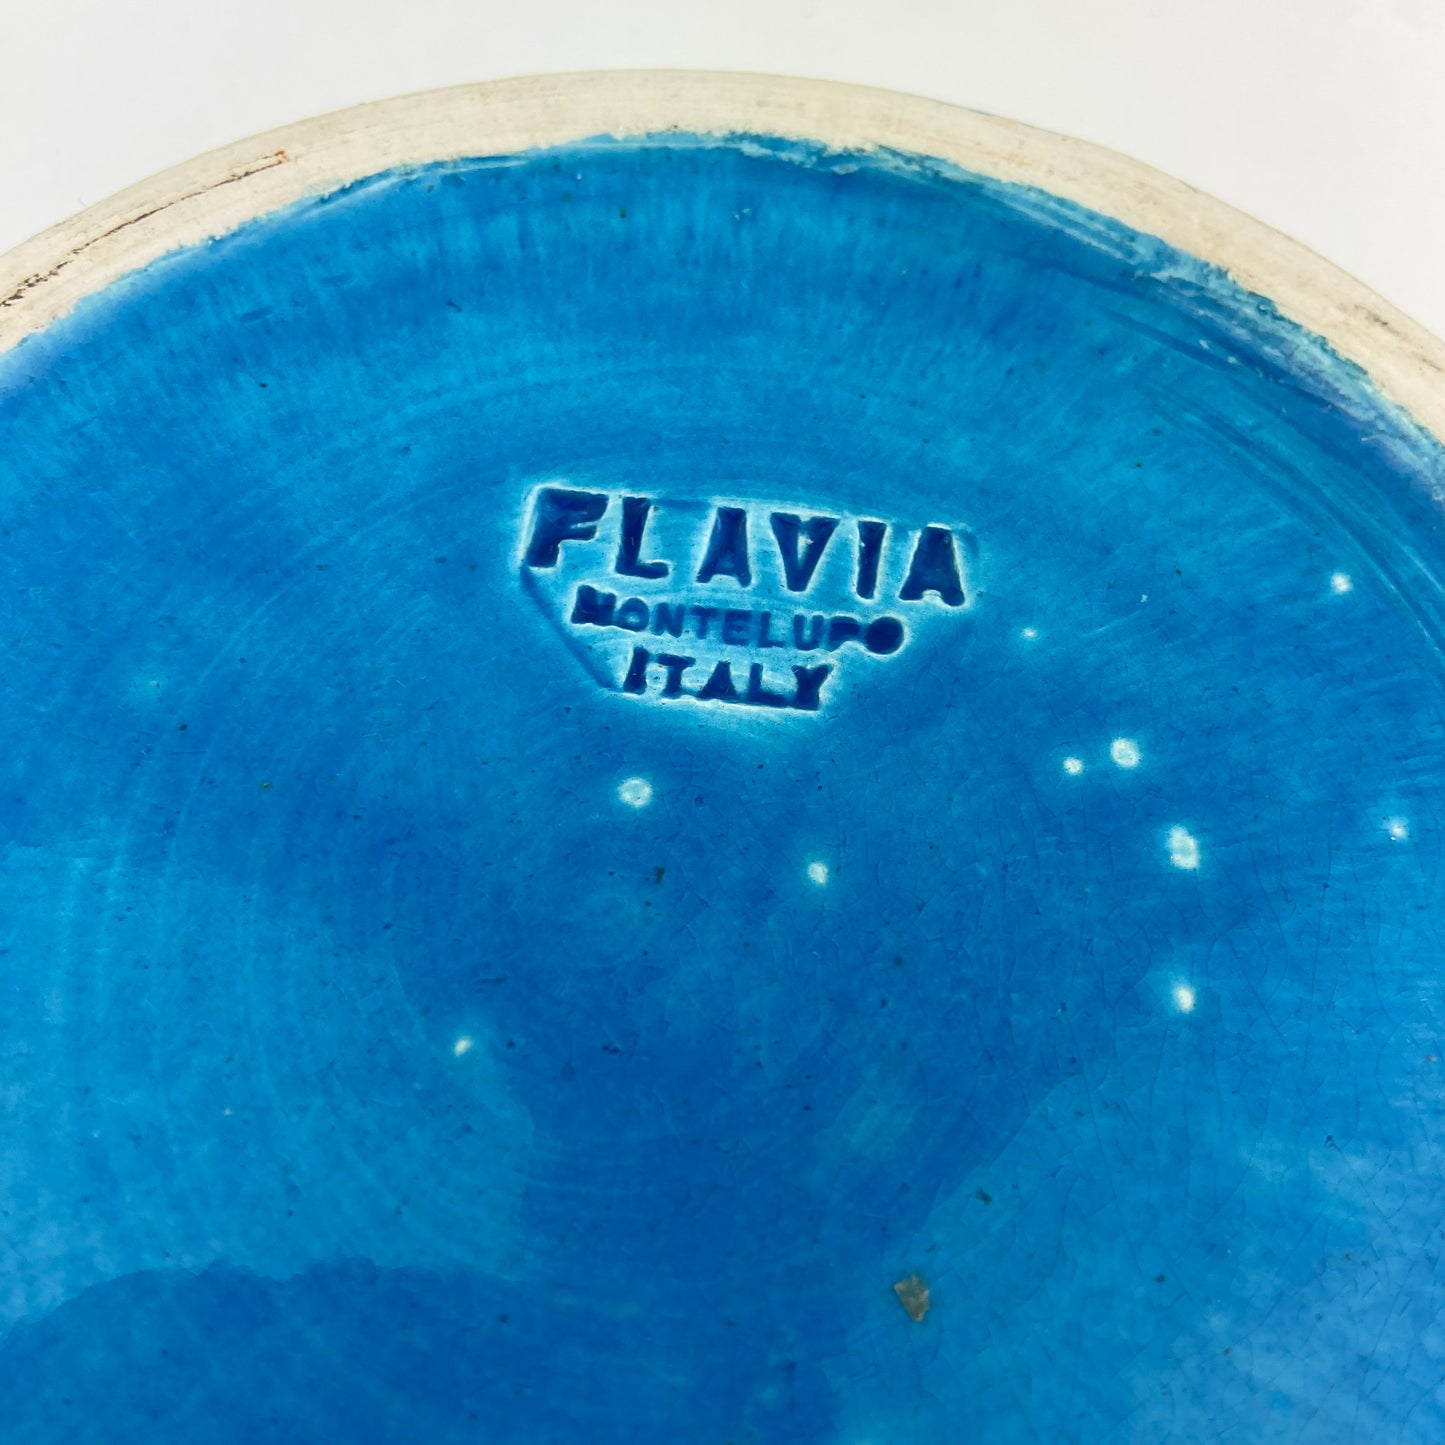 Bitossi 'Rimini Blu' Ceramic Ashtray/Catchall #O743